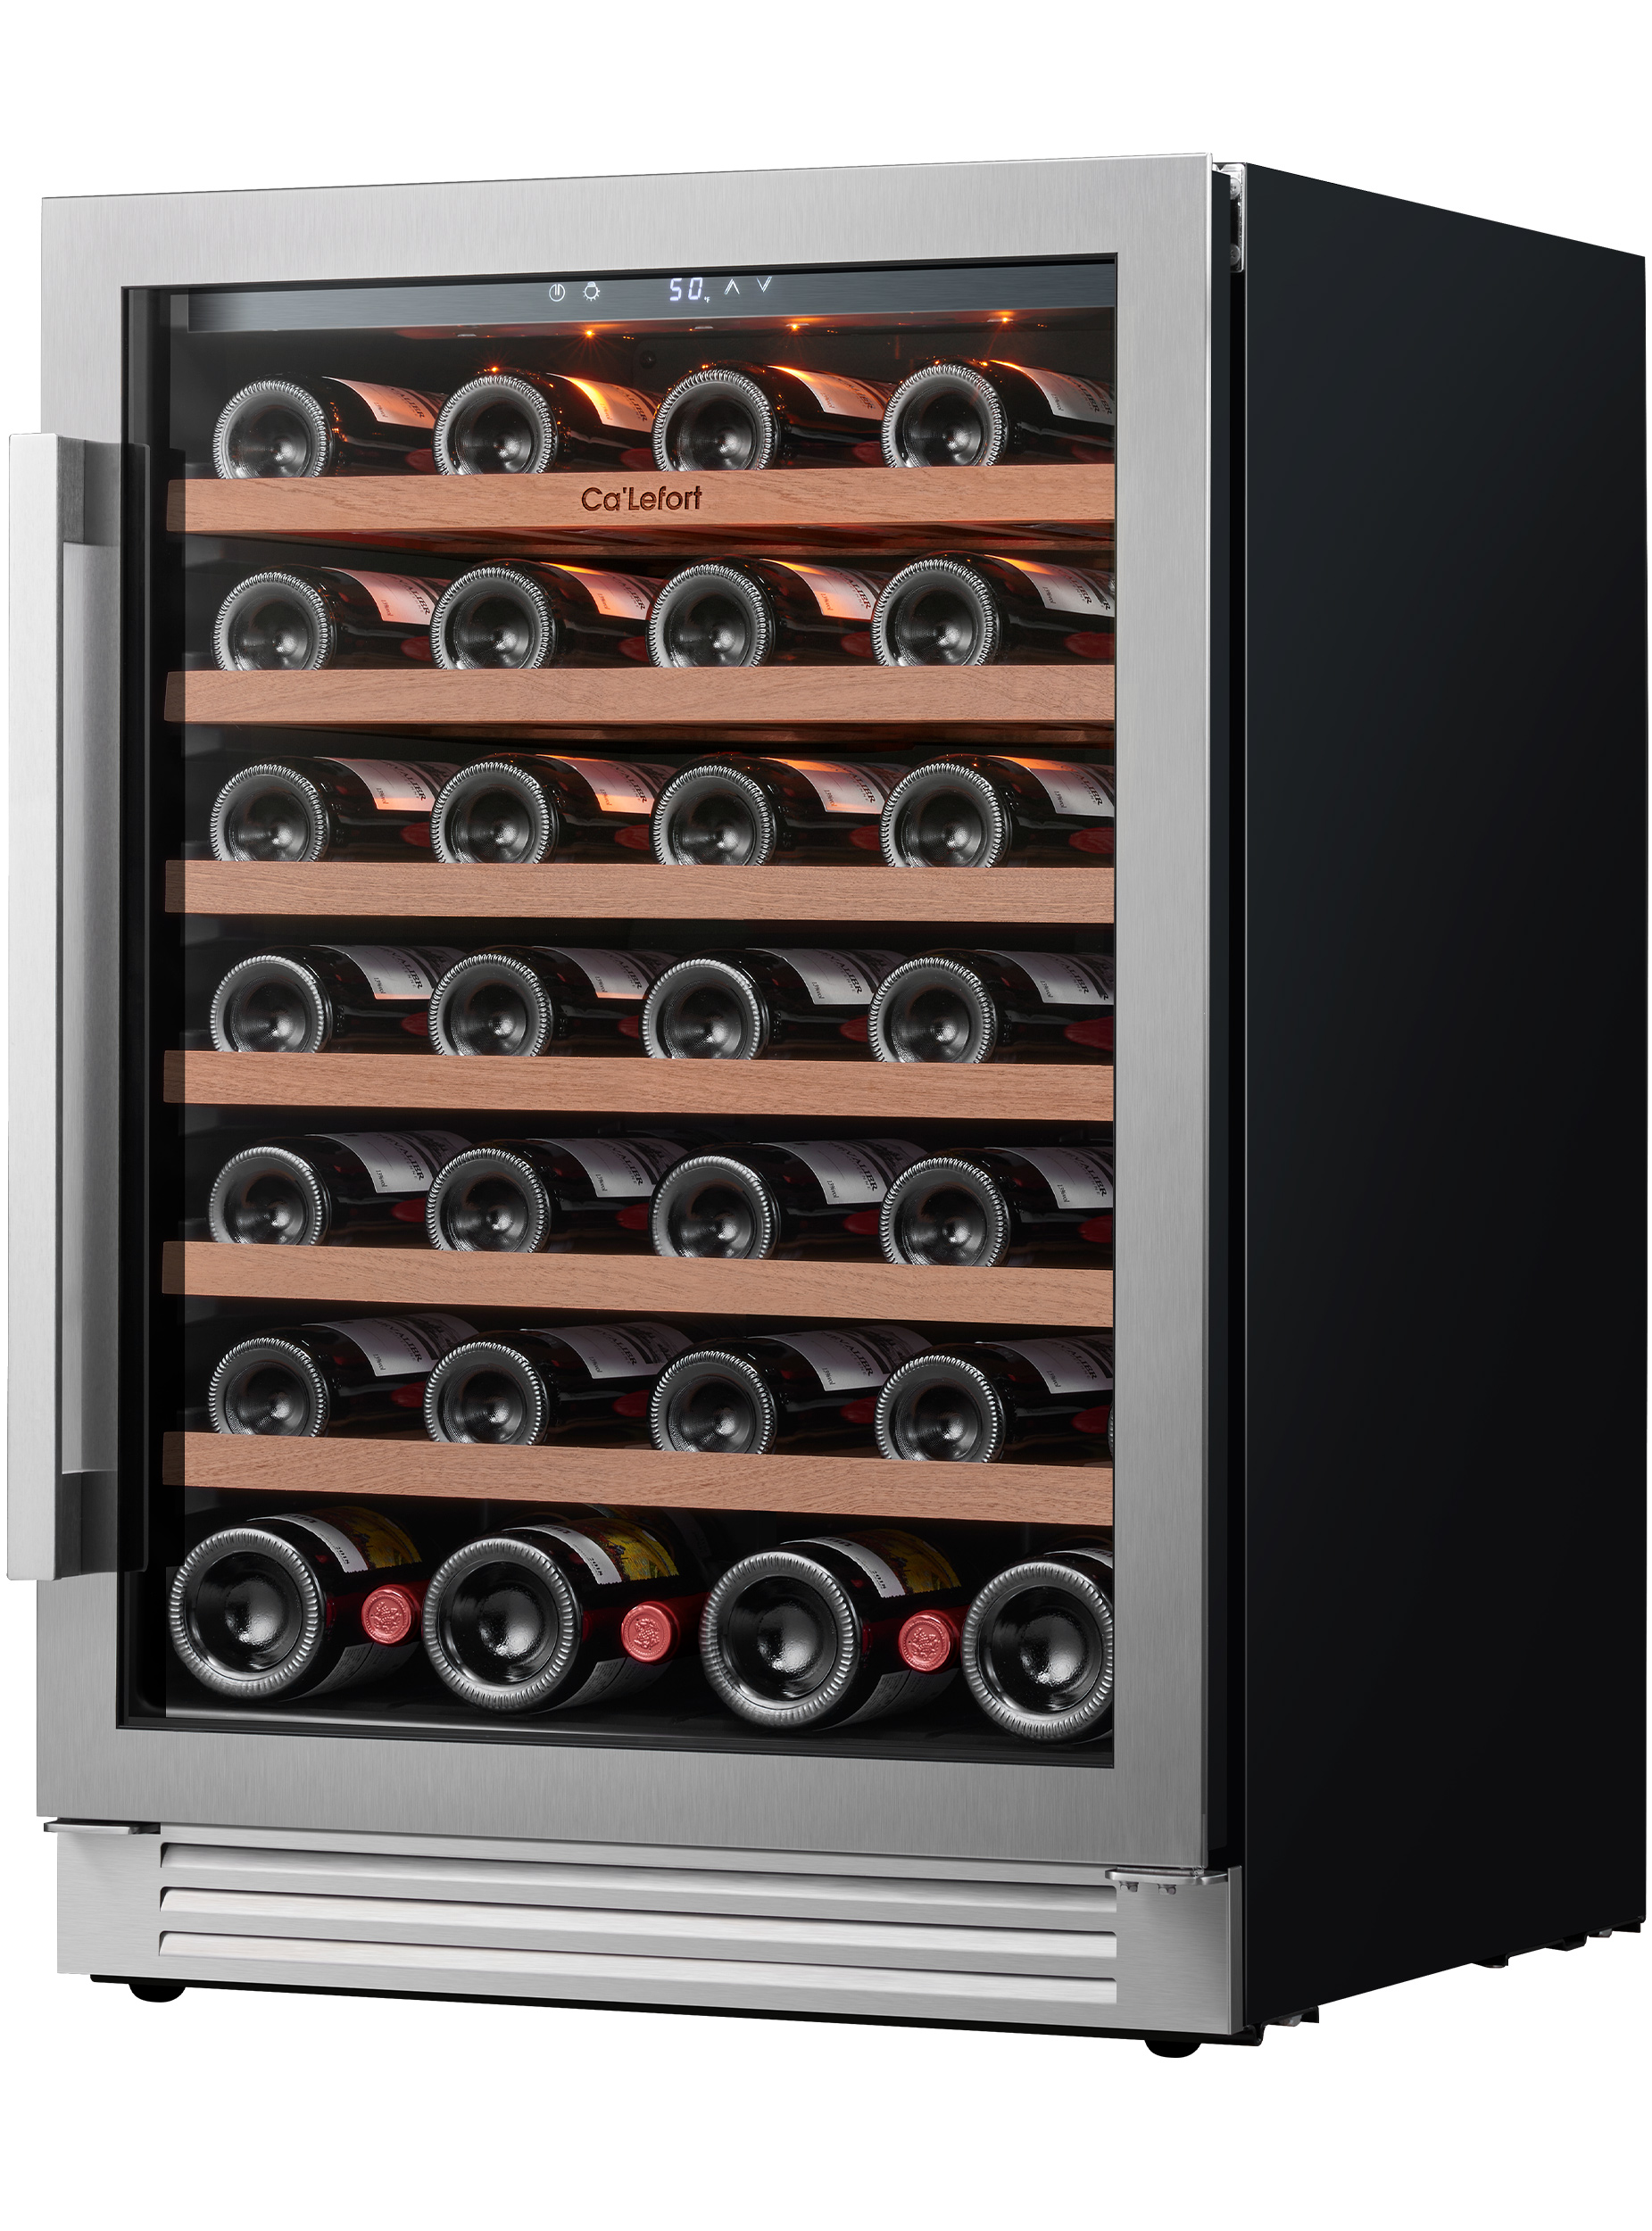 Ca'Lefort 24 inch Wine Cooler Refrigerator,54 Bottle Wine Fridge with Stainless Steel Glass Door - image 1 of 9